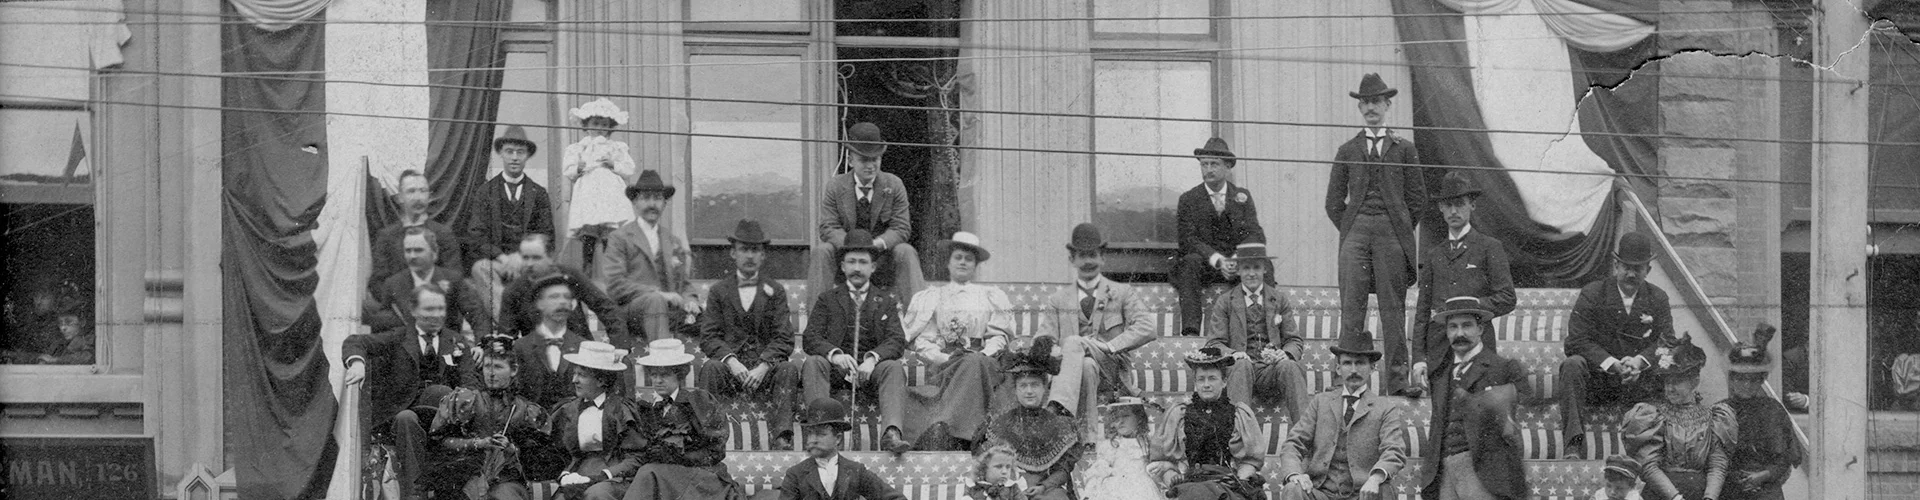 Vintage Group Photo 1895-1924